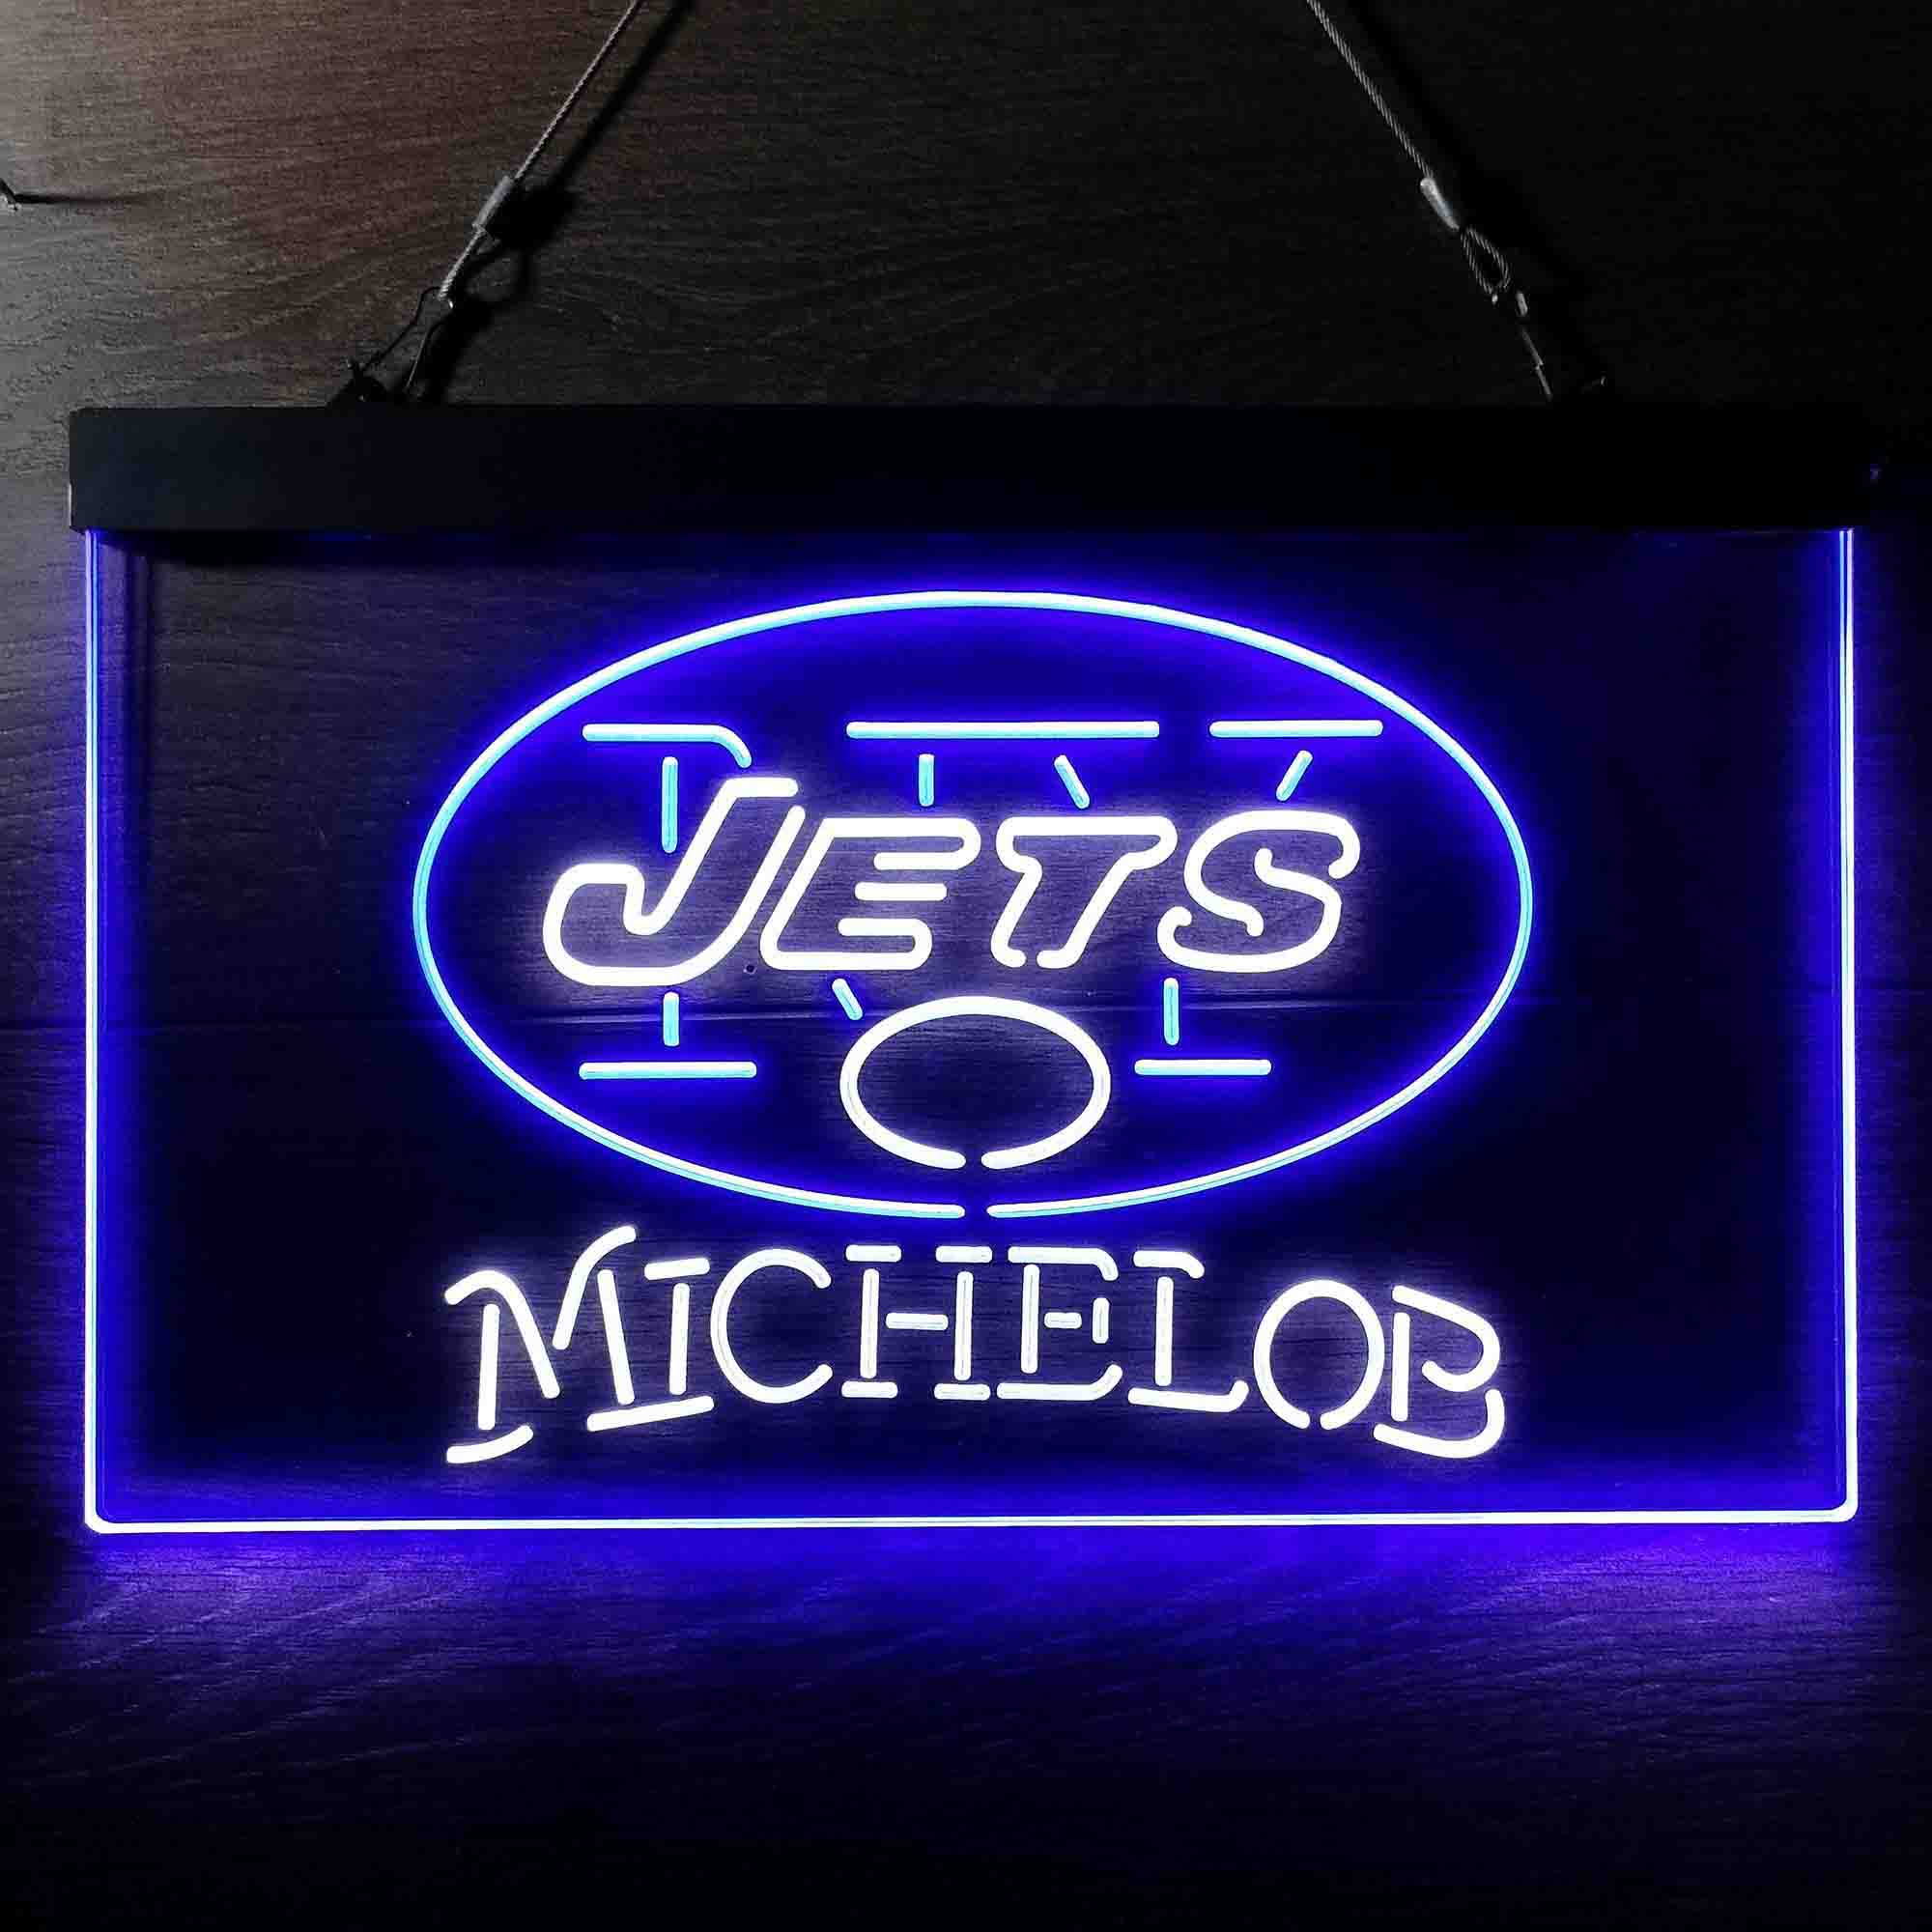 Michelob Bar New York Jets Est. 1960 LED Neon Sign